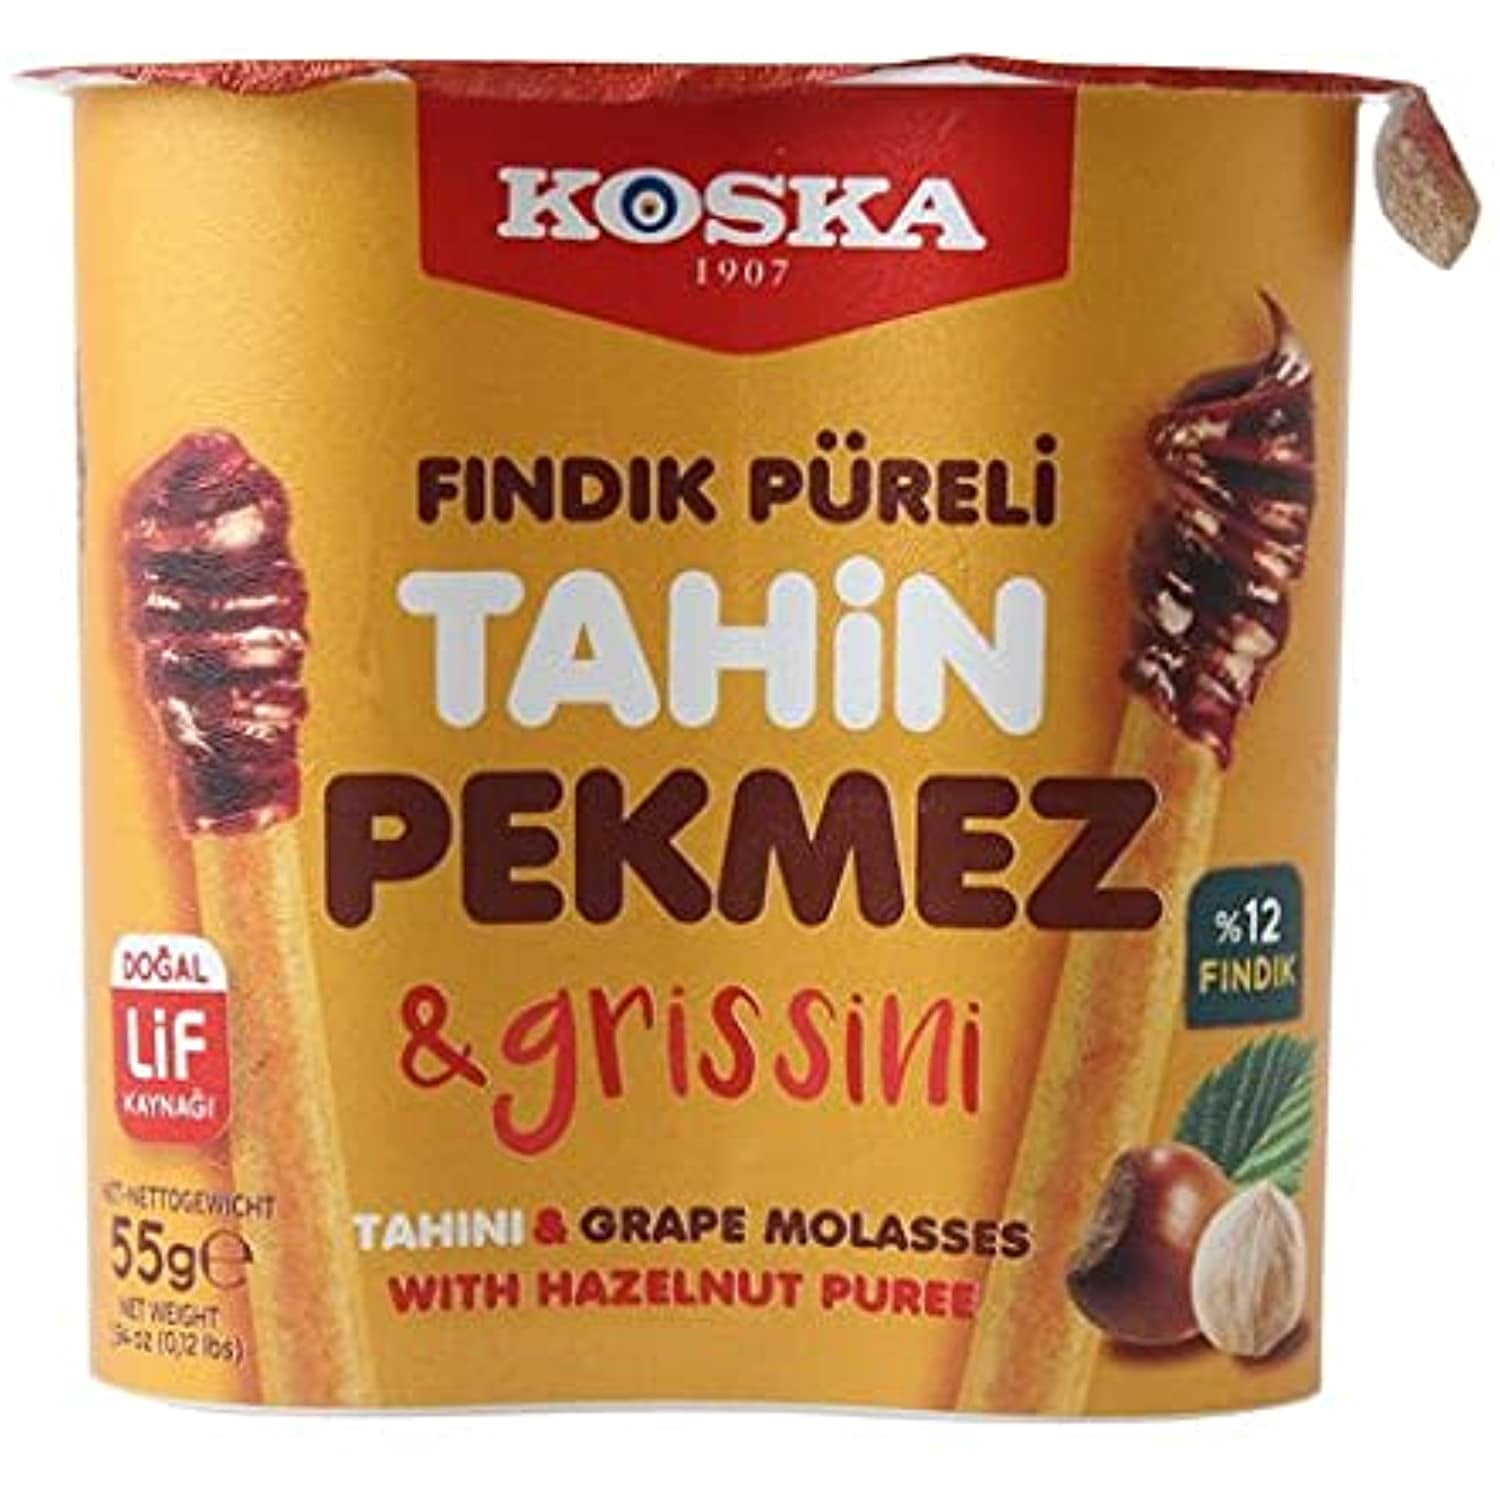 Tahini & Molasses “Tahin Pekmez” – Turkish Dessert / Spread – This